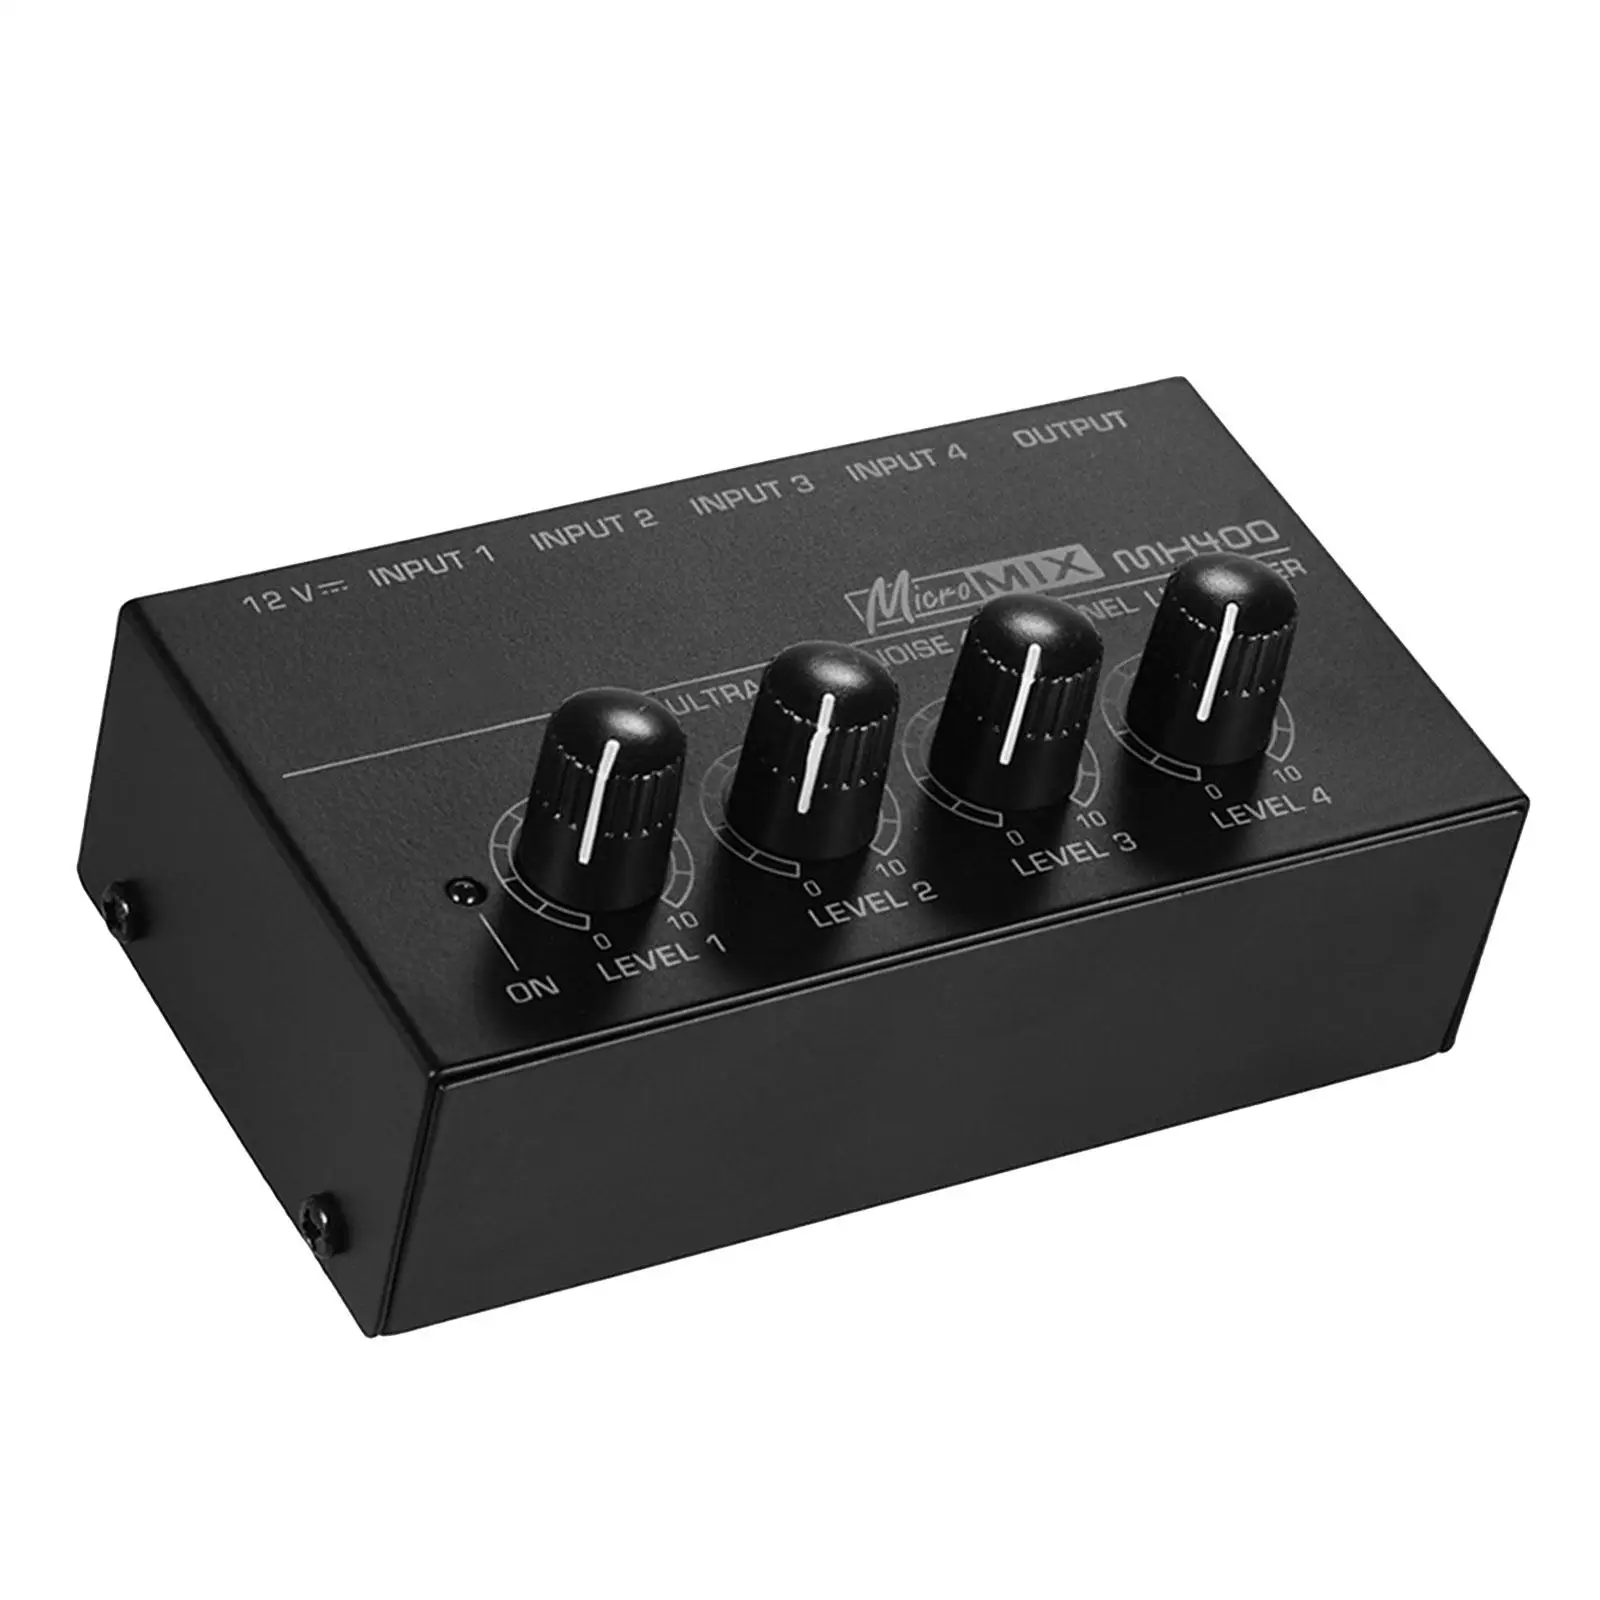 Audio Mixer Independent Volume Control Sound System Mini Echo Mixer for Guitars Recording Studio Outdoor Karaoke Live Broadcasts